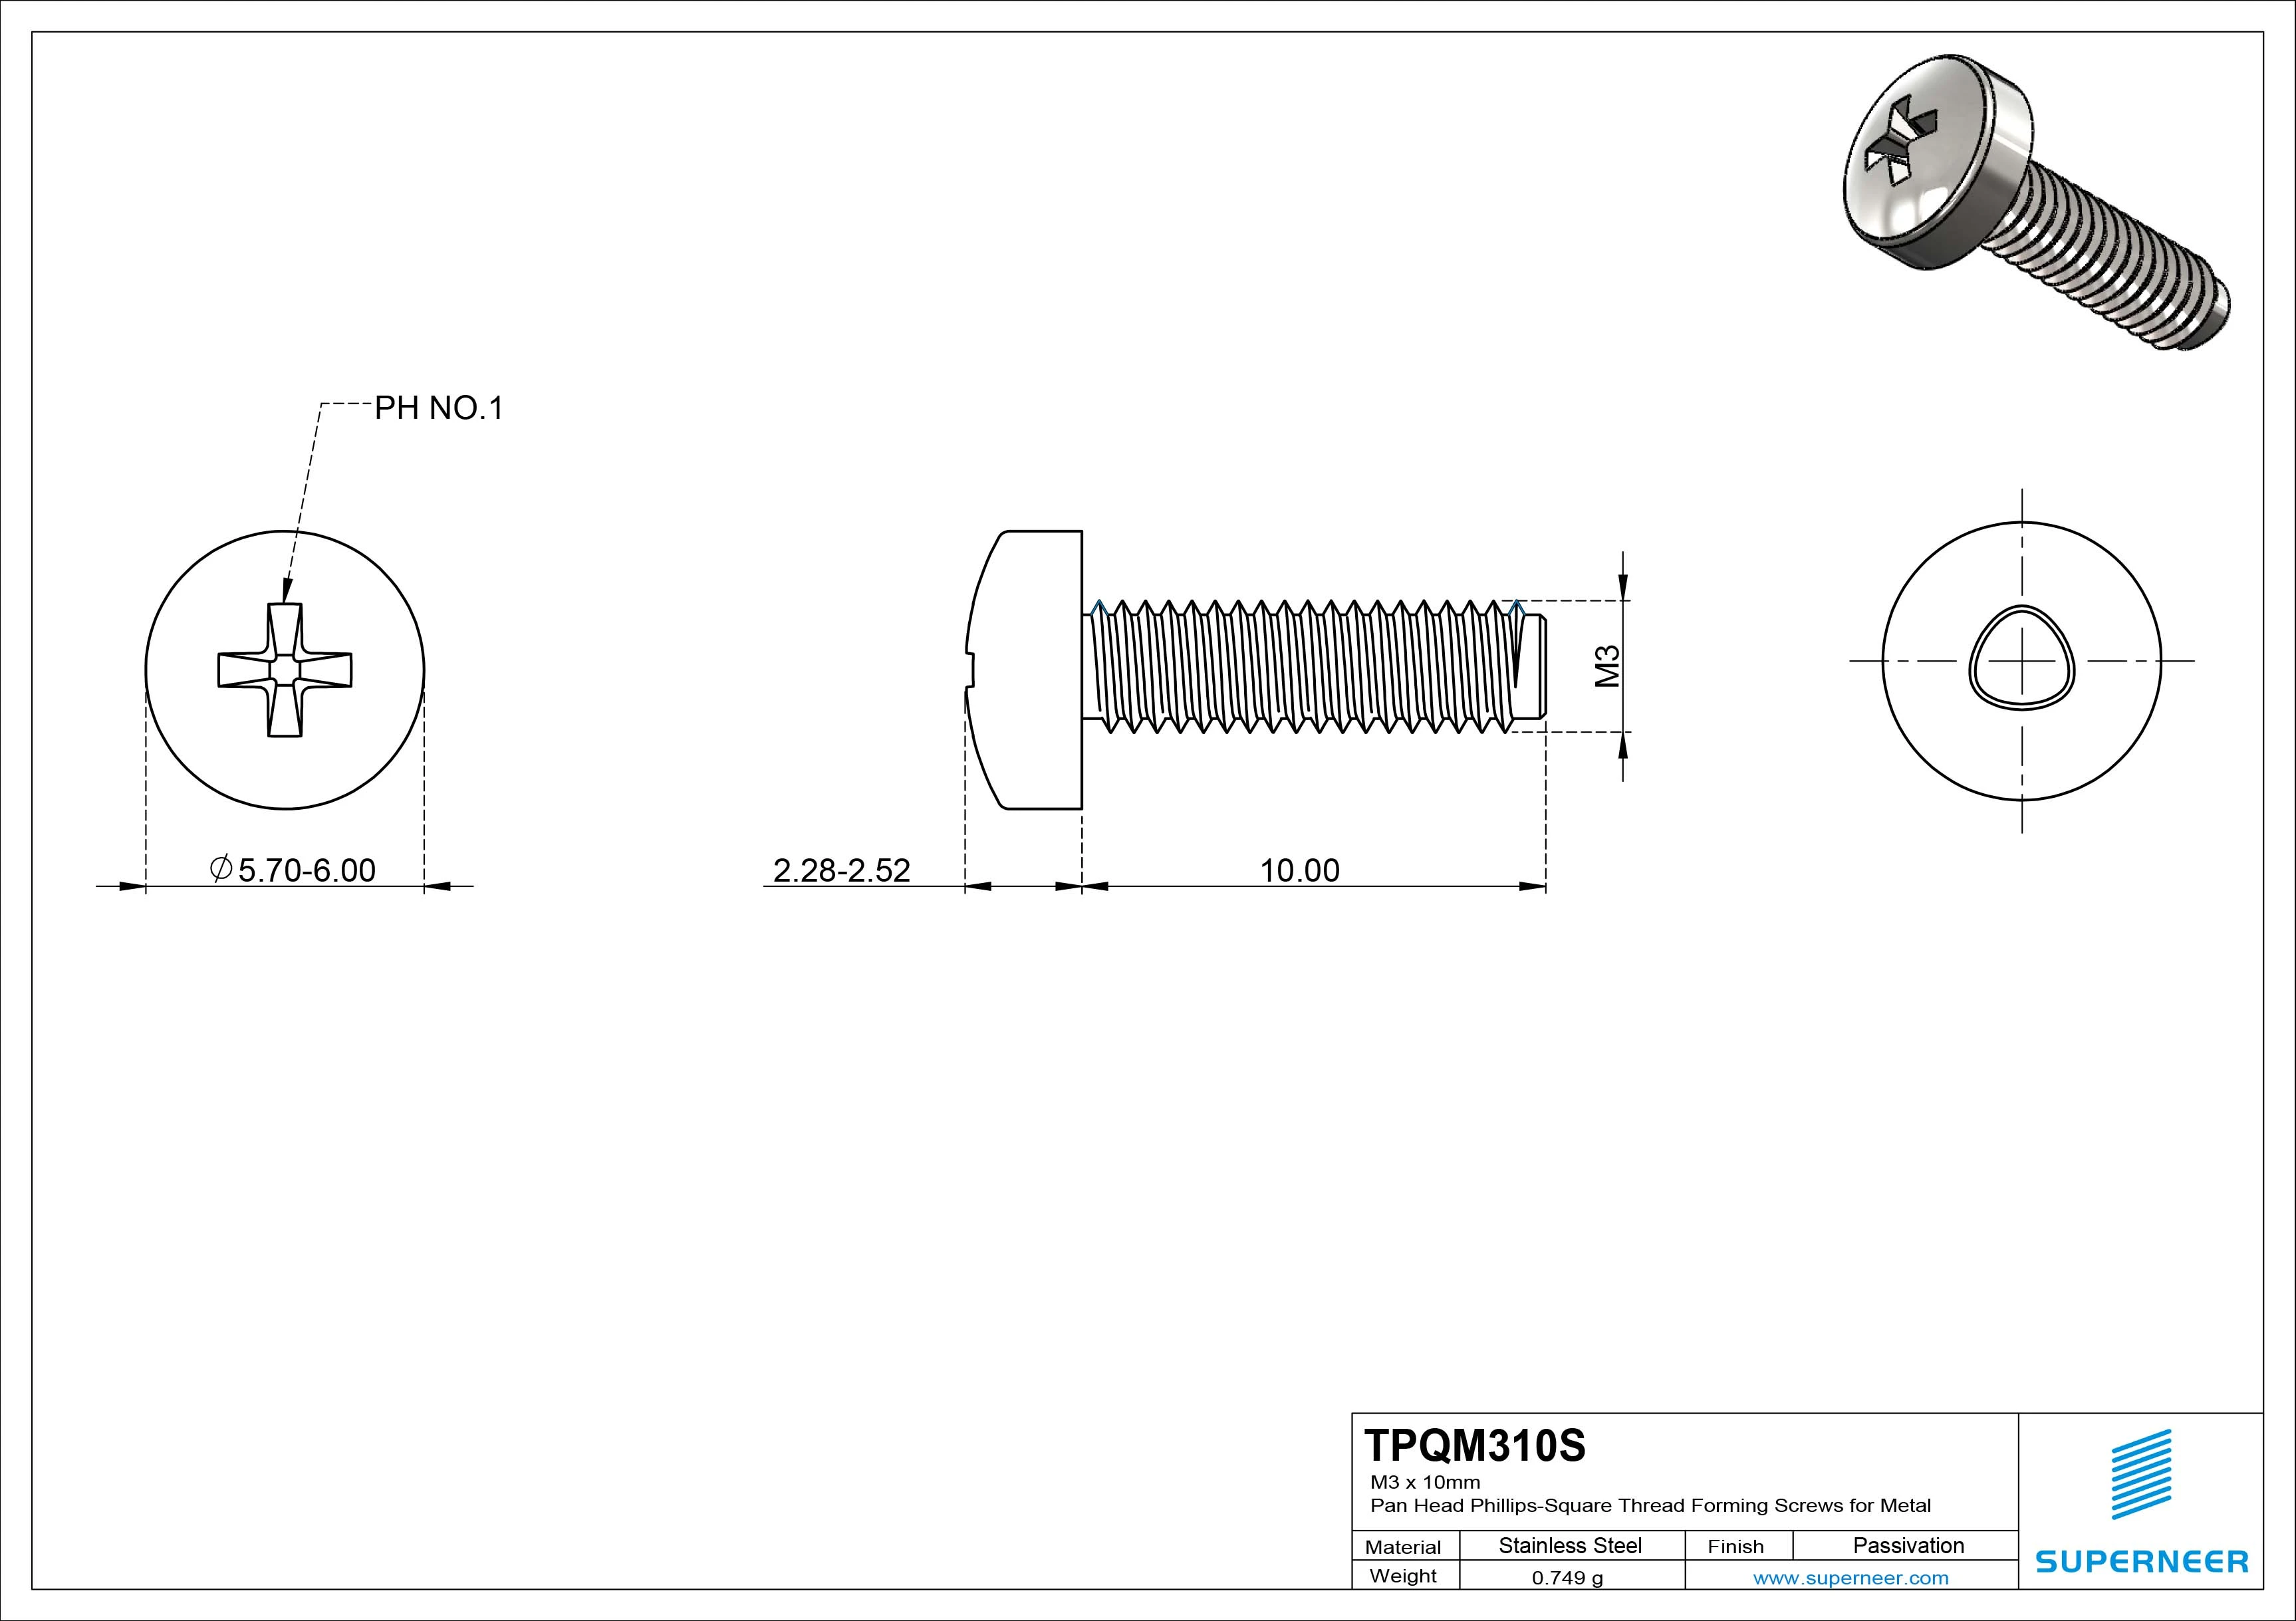 M3 × 10mm Pan Head Phillips-Square Thread Forming Screws for Metal SUS304 Stainless Steel Inox